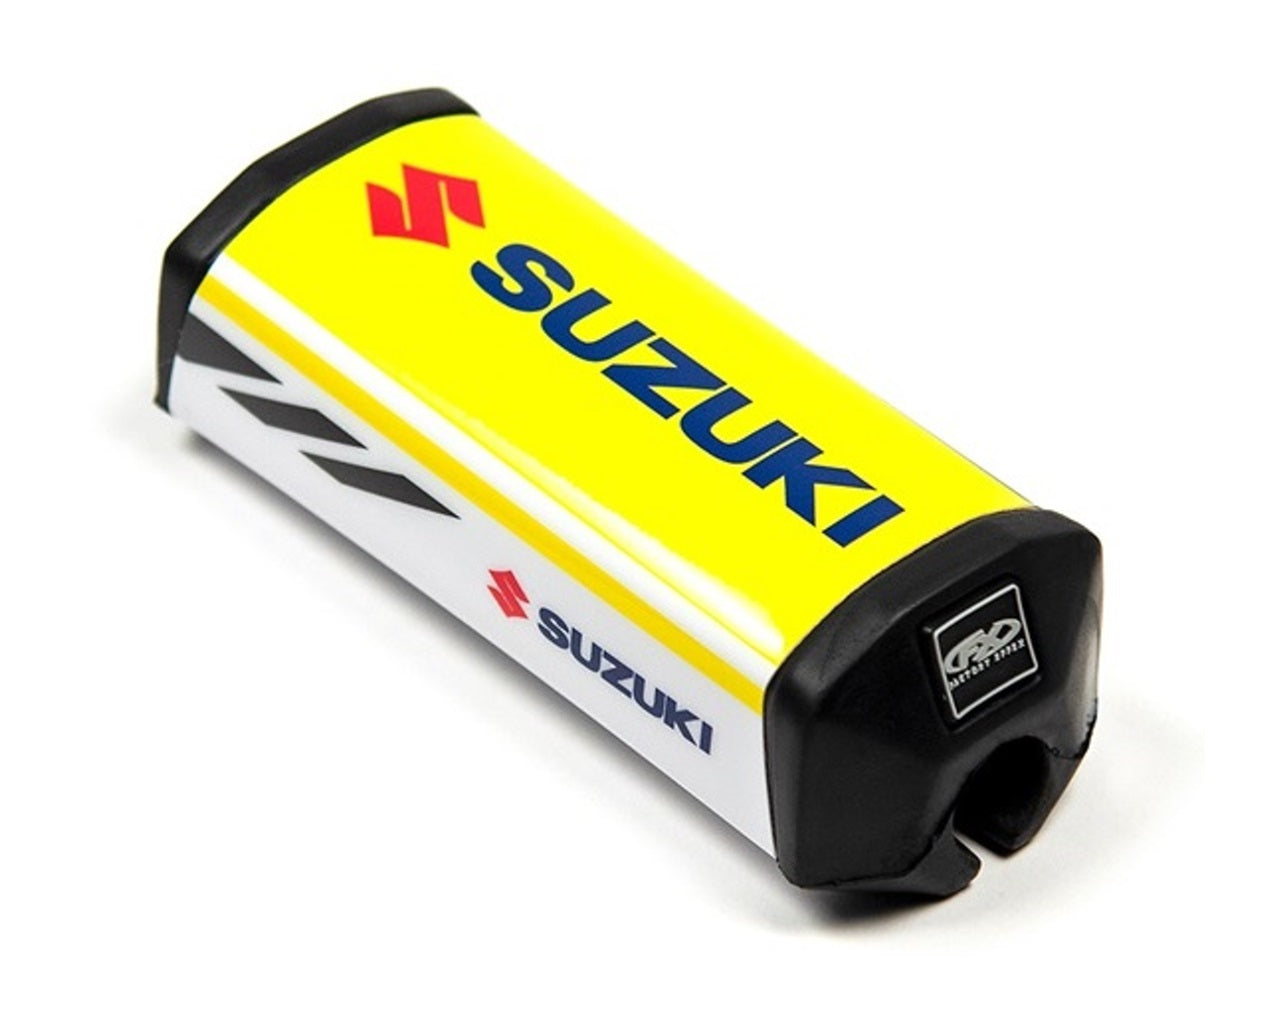 Suzuki Race Tean Premium MX Bulge Bar Pad RMZ 990A0-85014